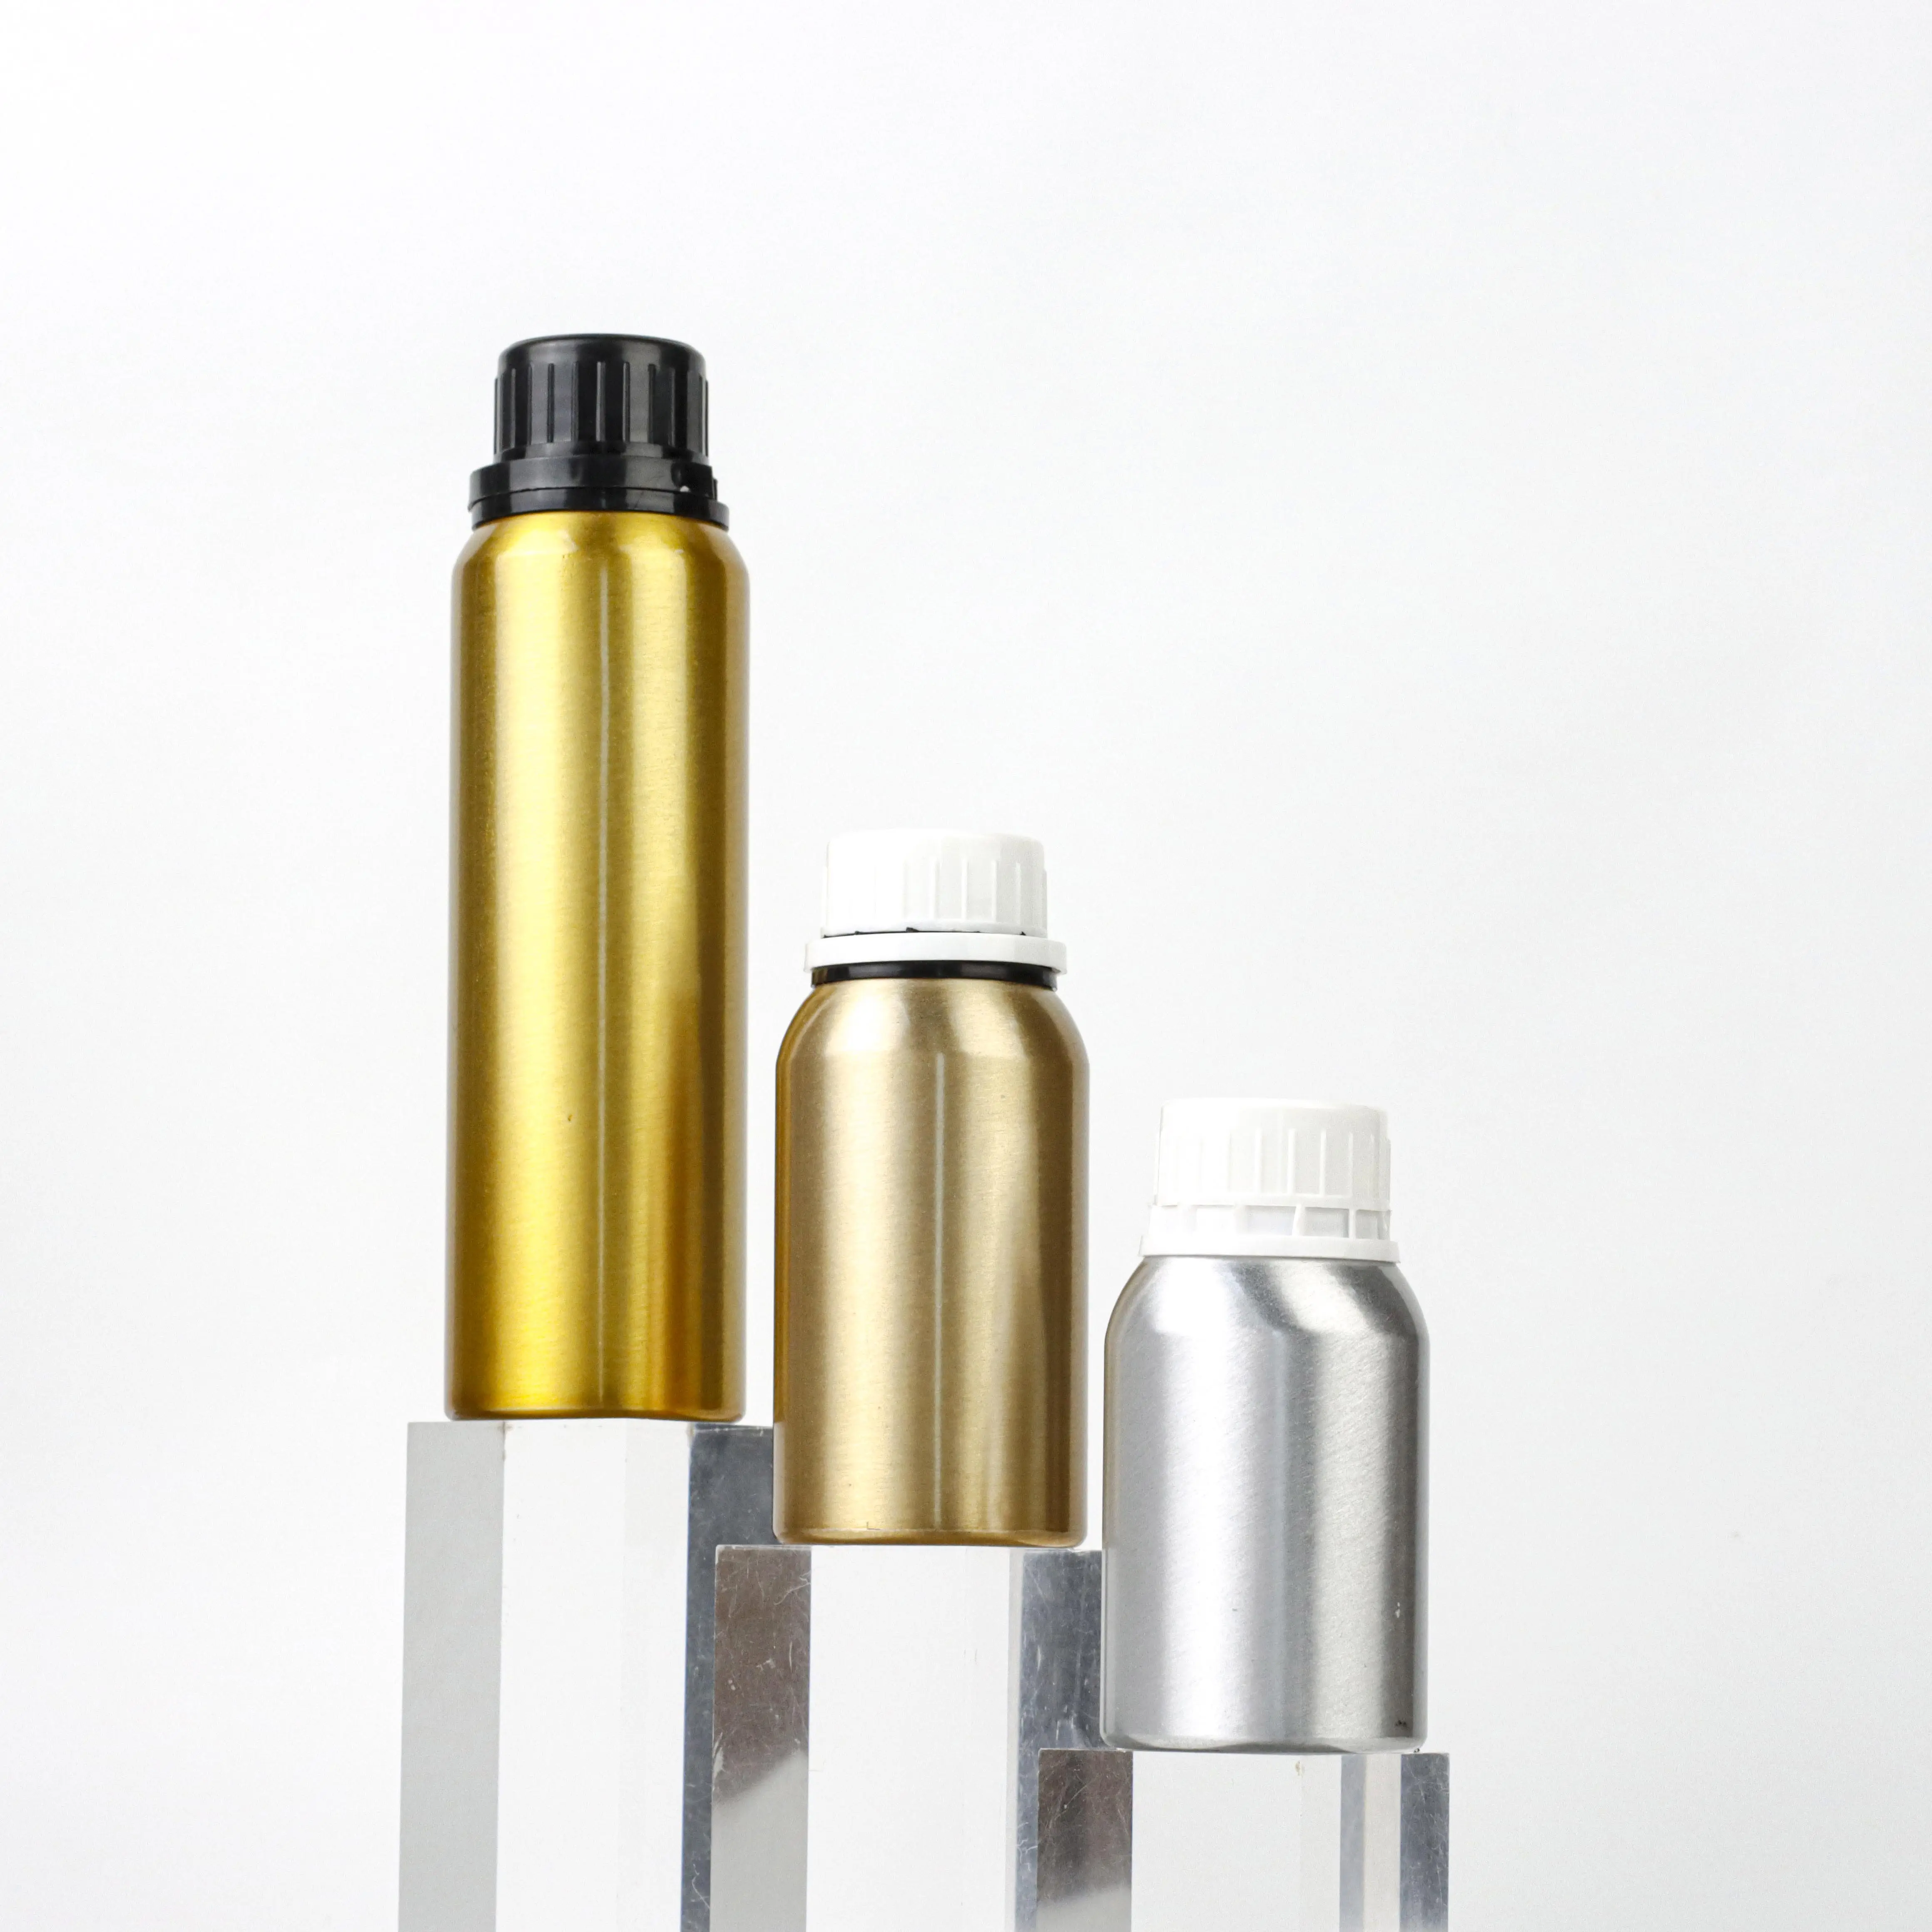 Botol minyak esensial cairan kimia kosmetik anti bocor OEM/ODM botol aluminium daur ulang 50ml-2000ml